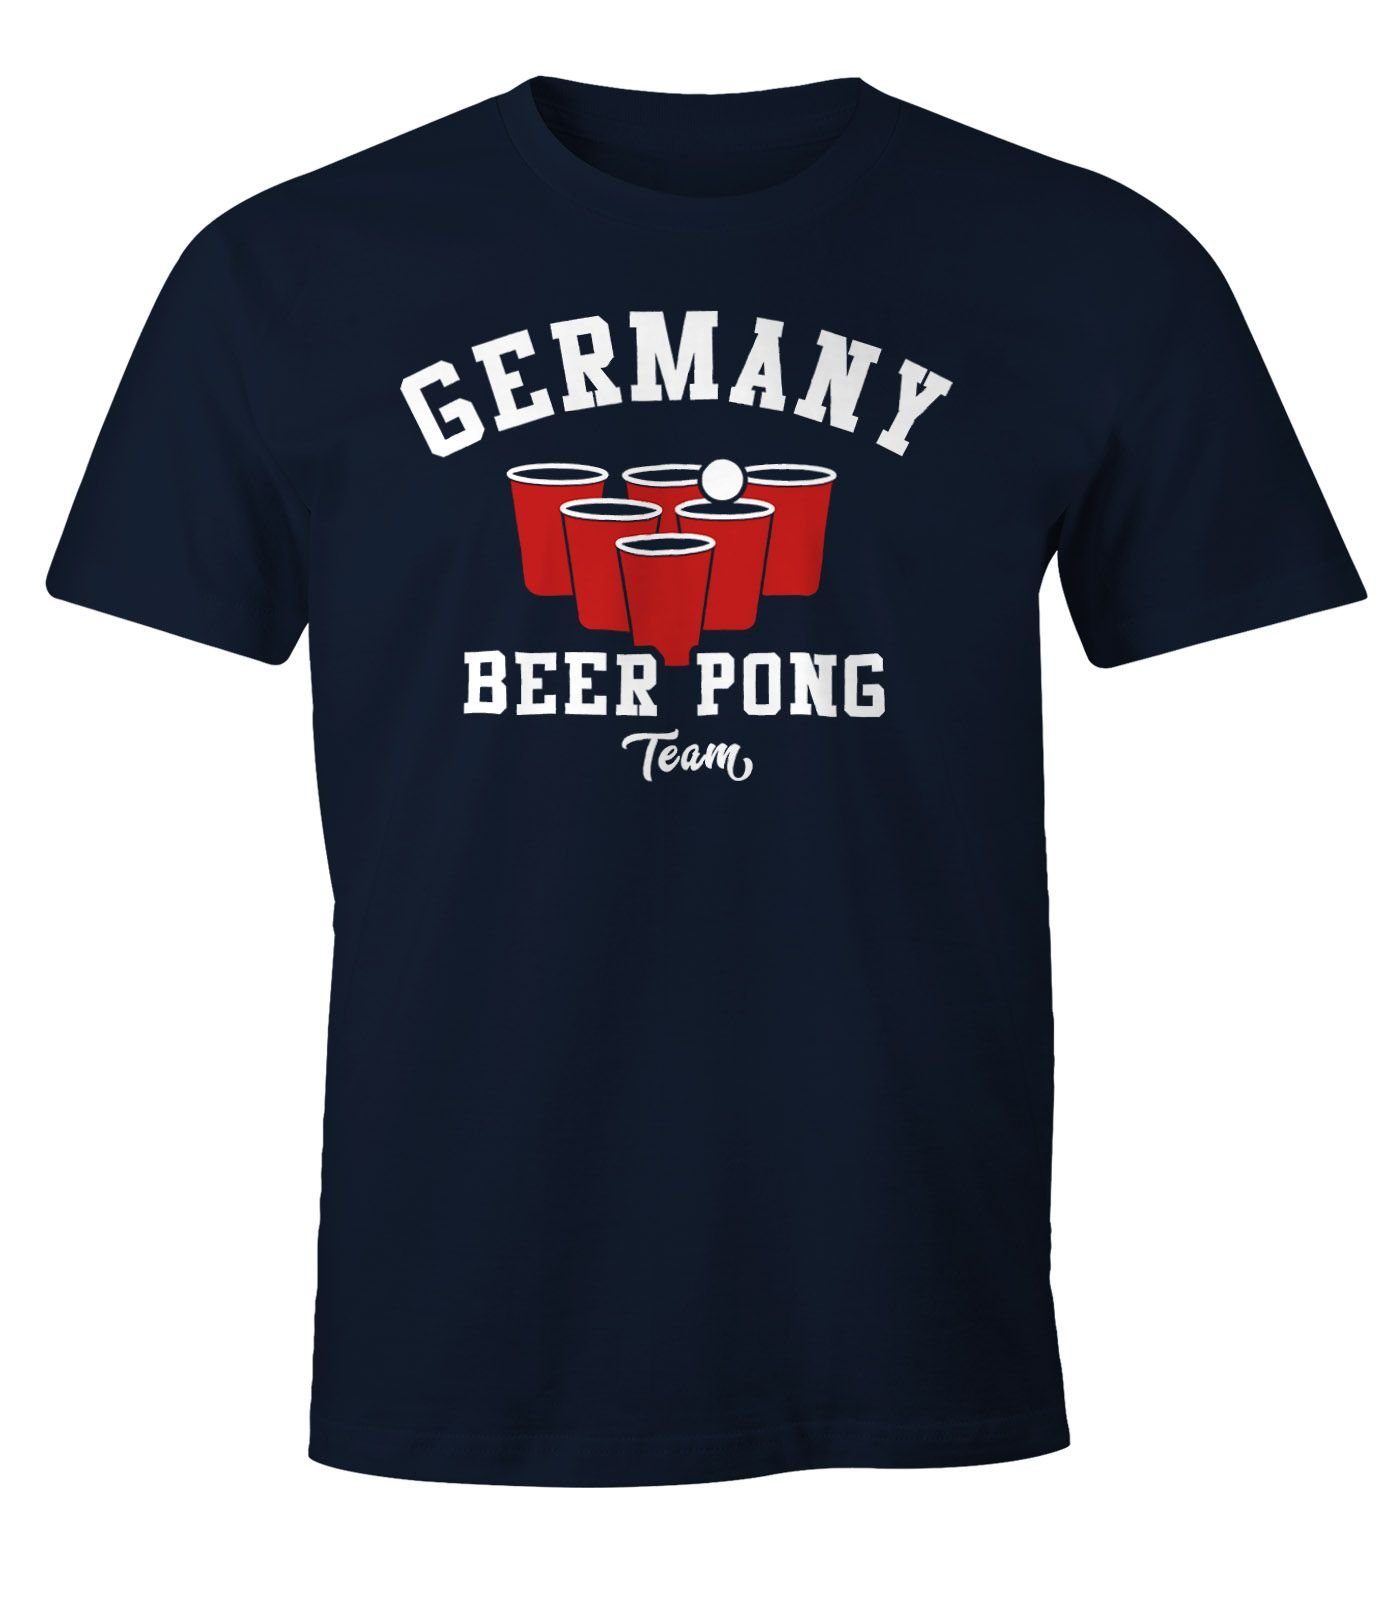 MoonWorks Print-Shirt Herren T-Shirt Fun-Shirt Print Moonworks® Pong Beer mit Germany Bier Team navy